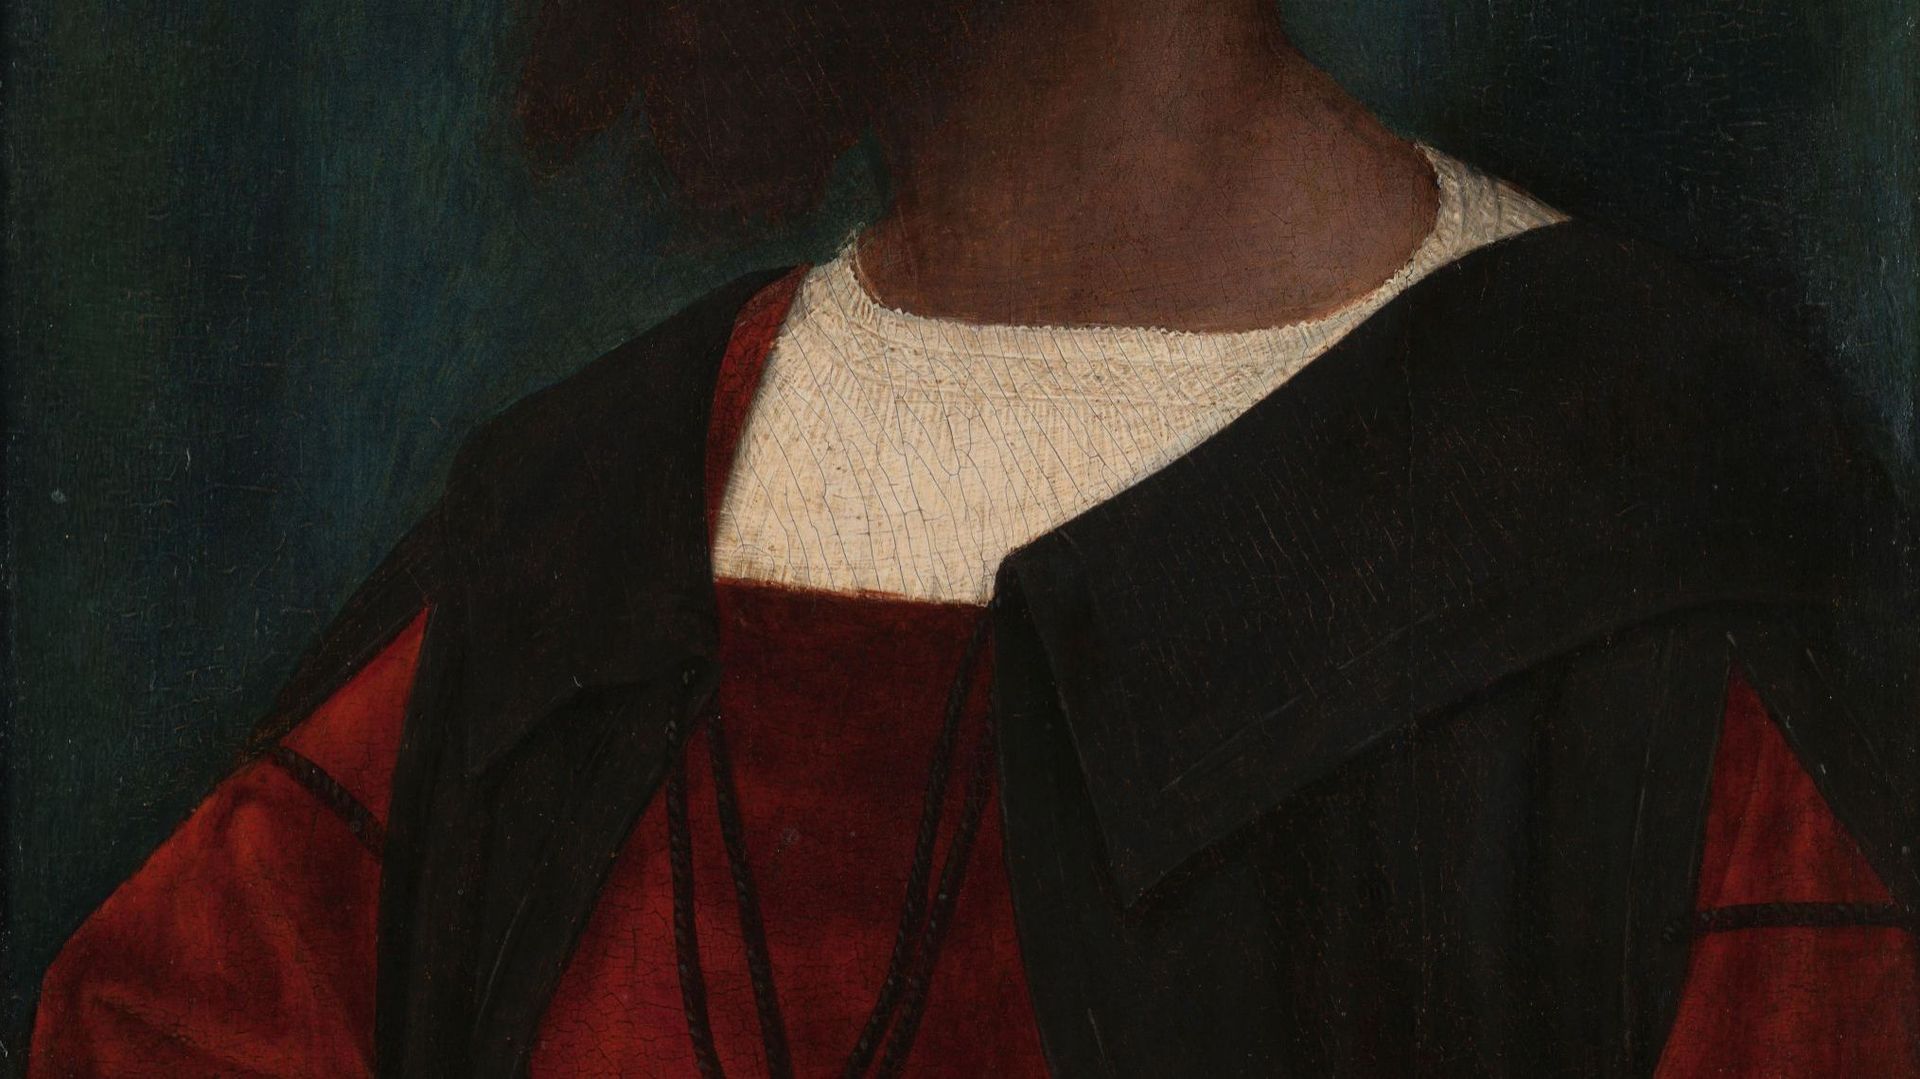 Jan Jansz Mostaert, "Portrait of an African Man" (Christophle le More?), ca. 1525 - ca. 1530. Rijksmuseum